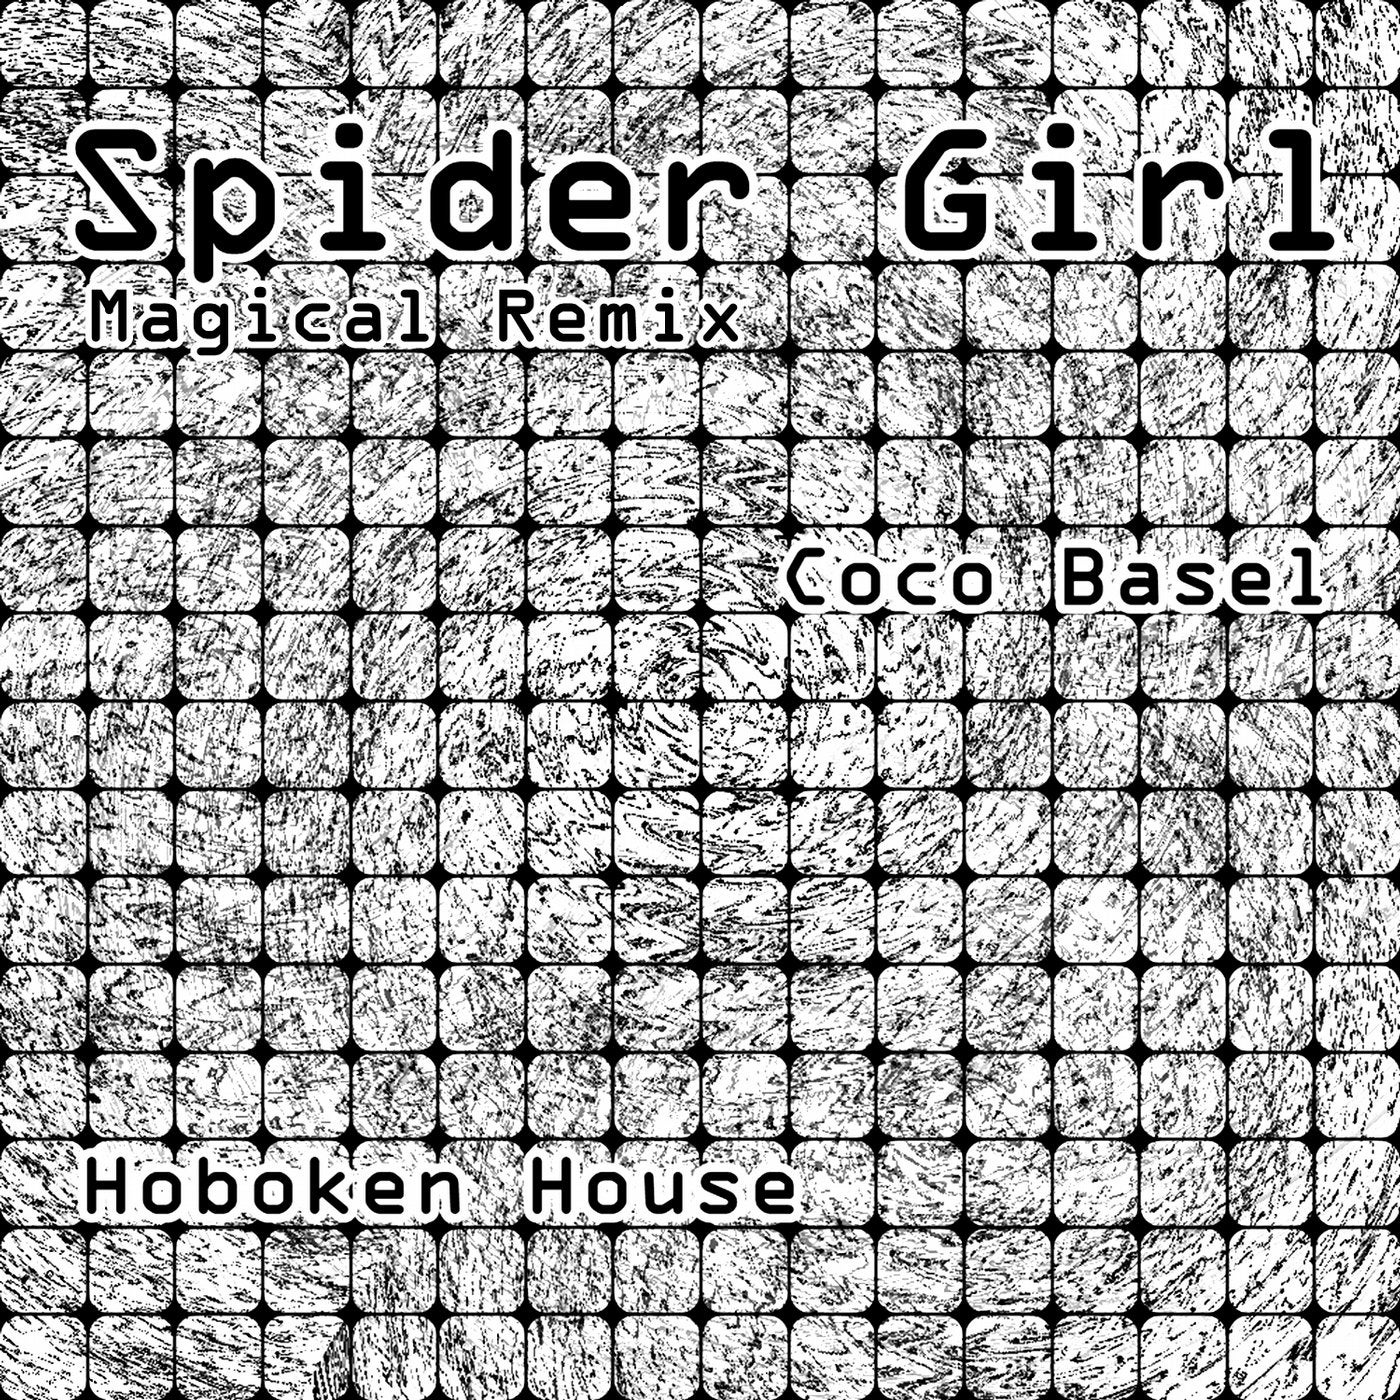 Spider Girl(Magical Remix)